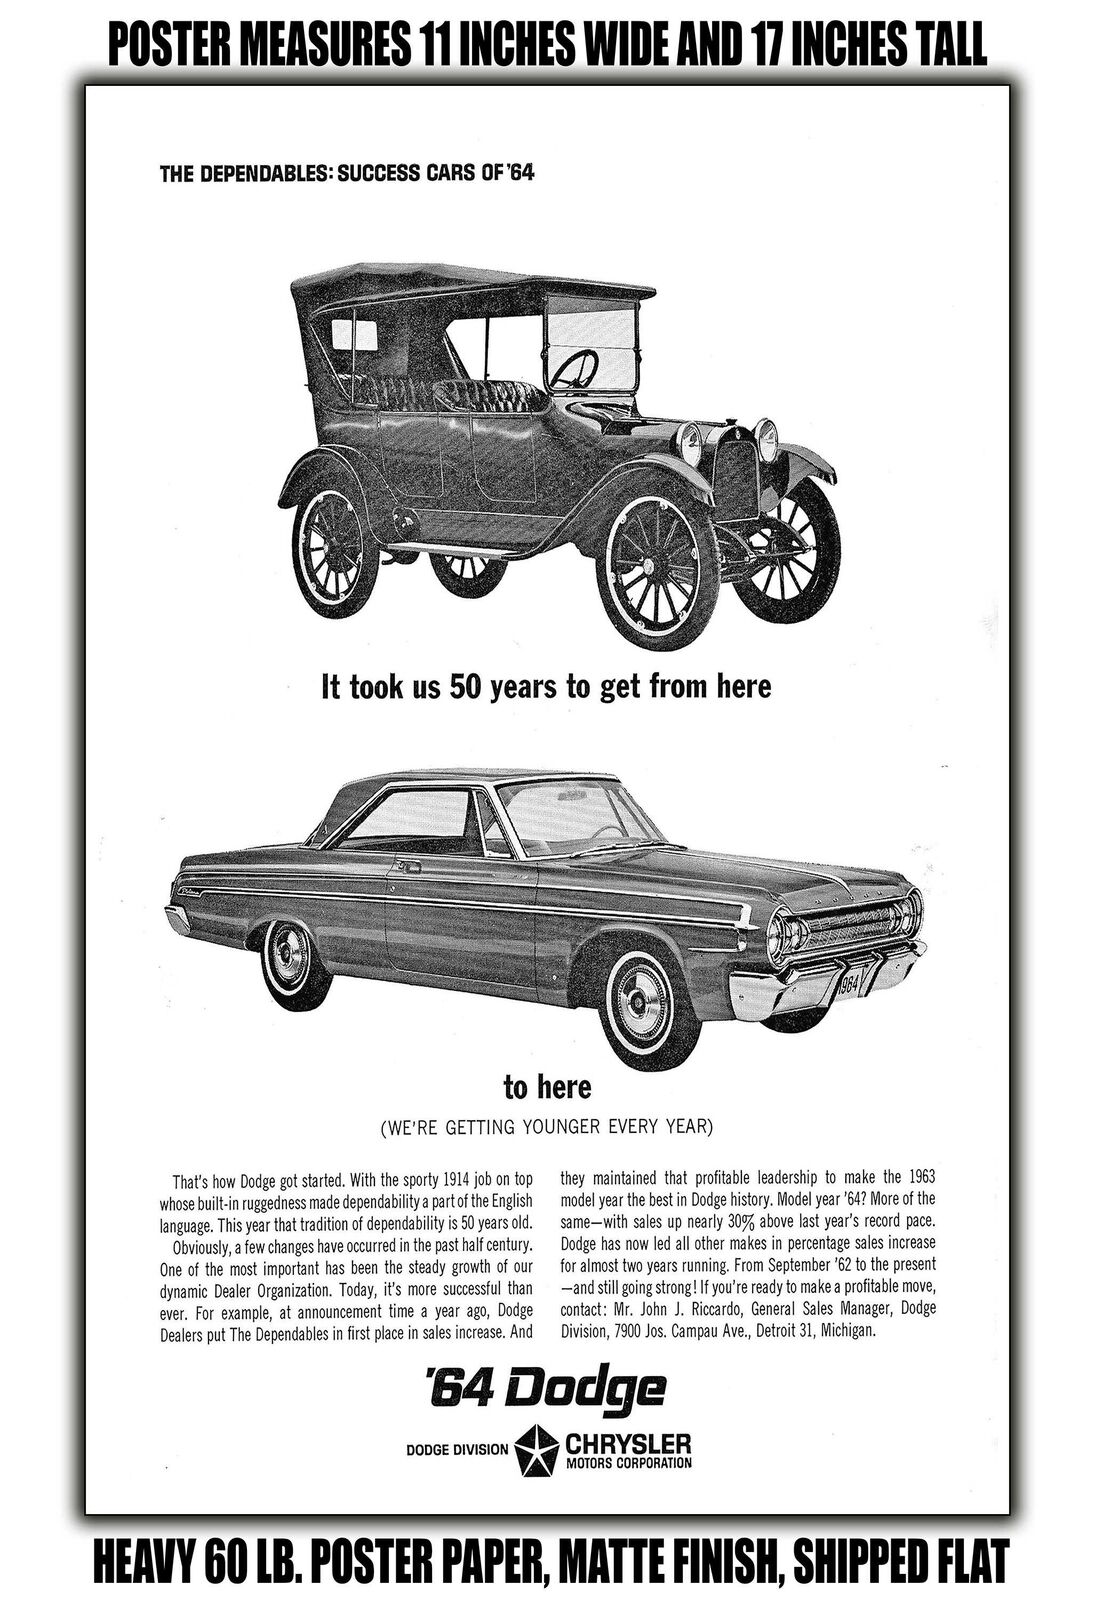 11x17 POSTER - 1964 Dodge 1914 1964 Dodge Cars